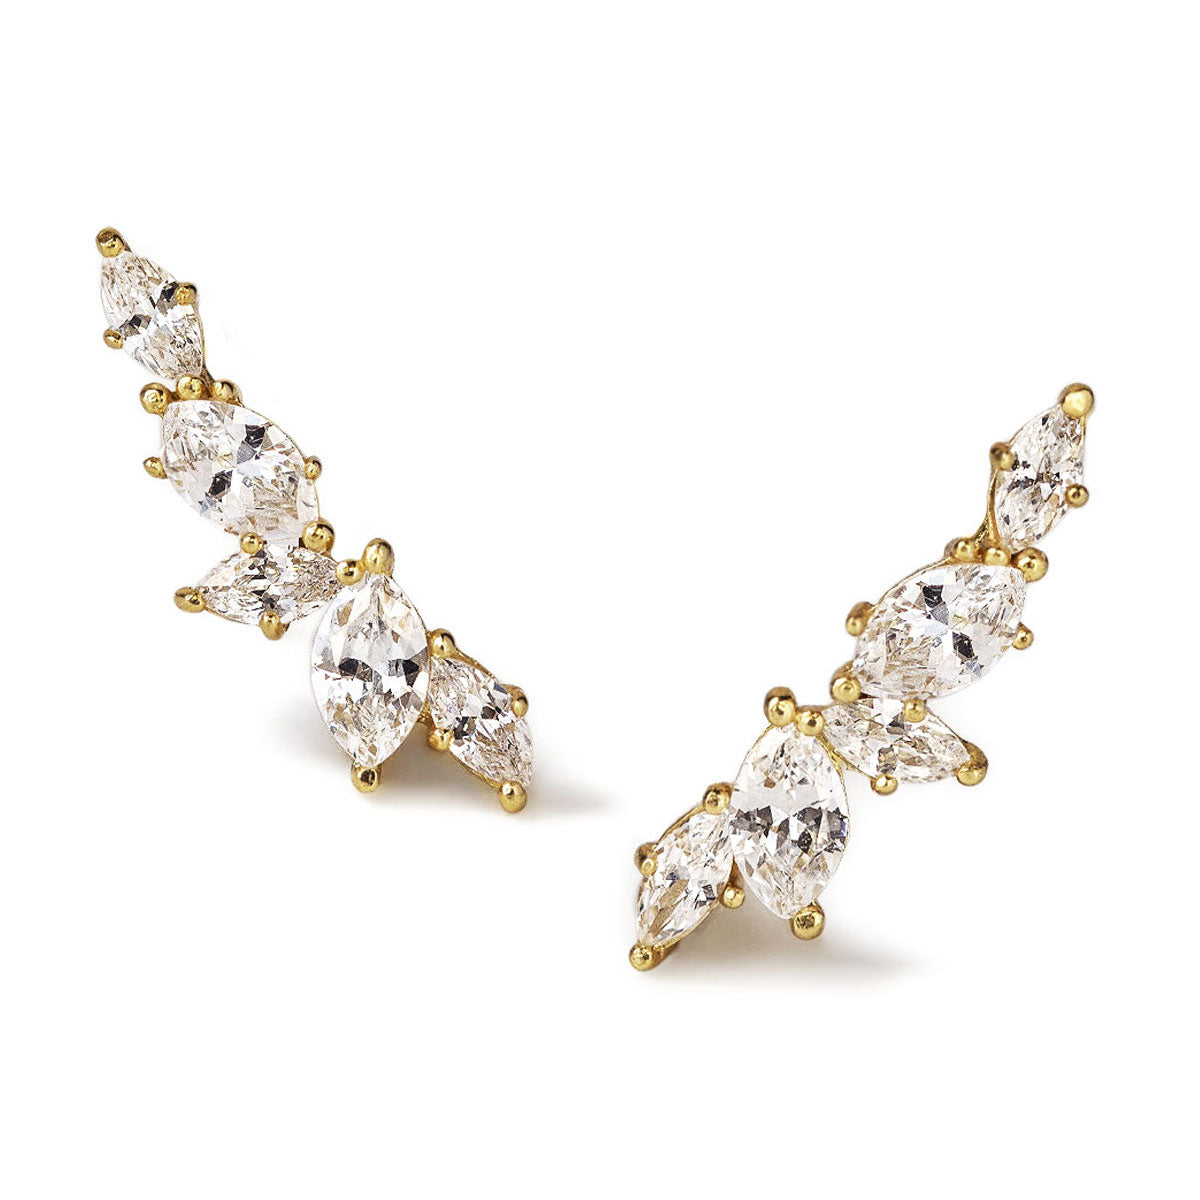 5 Black Diamond Earrings Rose Gold Studs Curved Crawler Earrings 14K White Gold - Made to Order